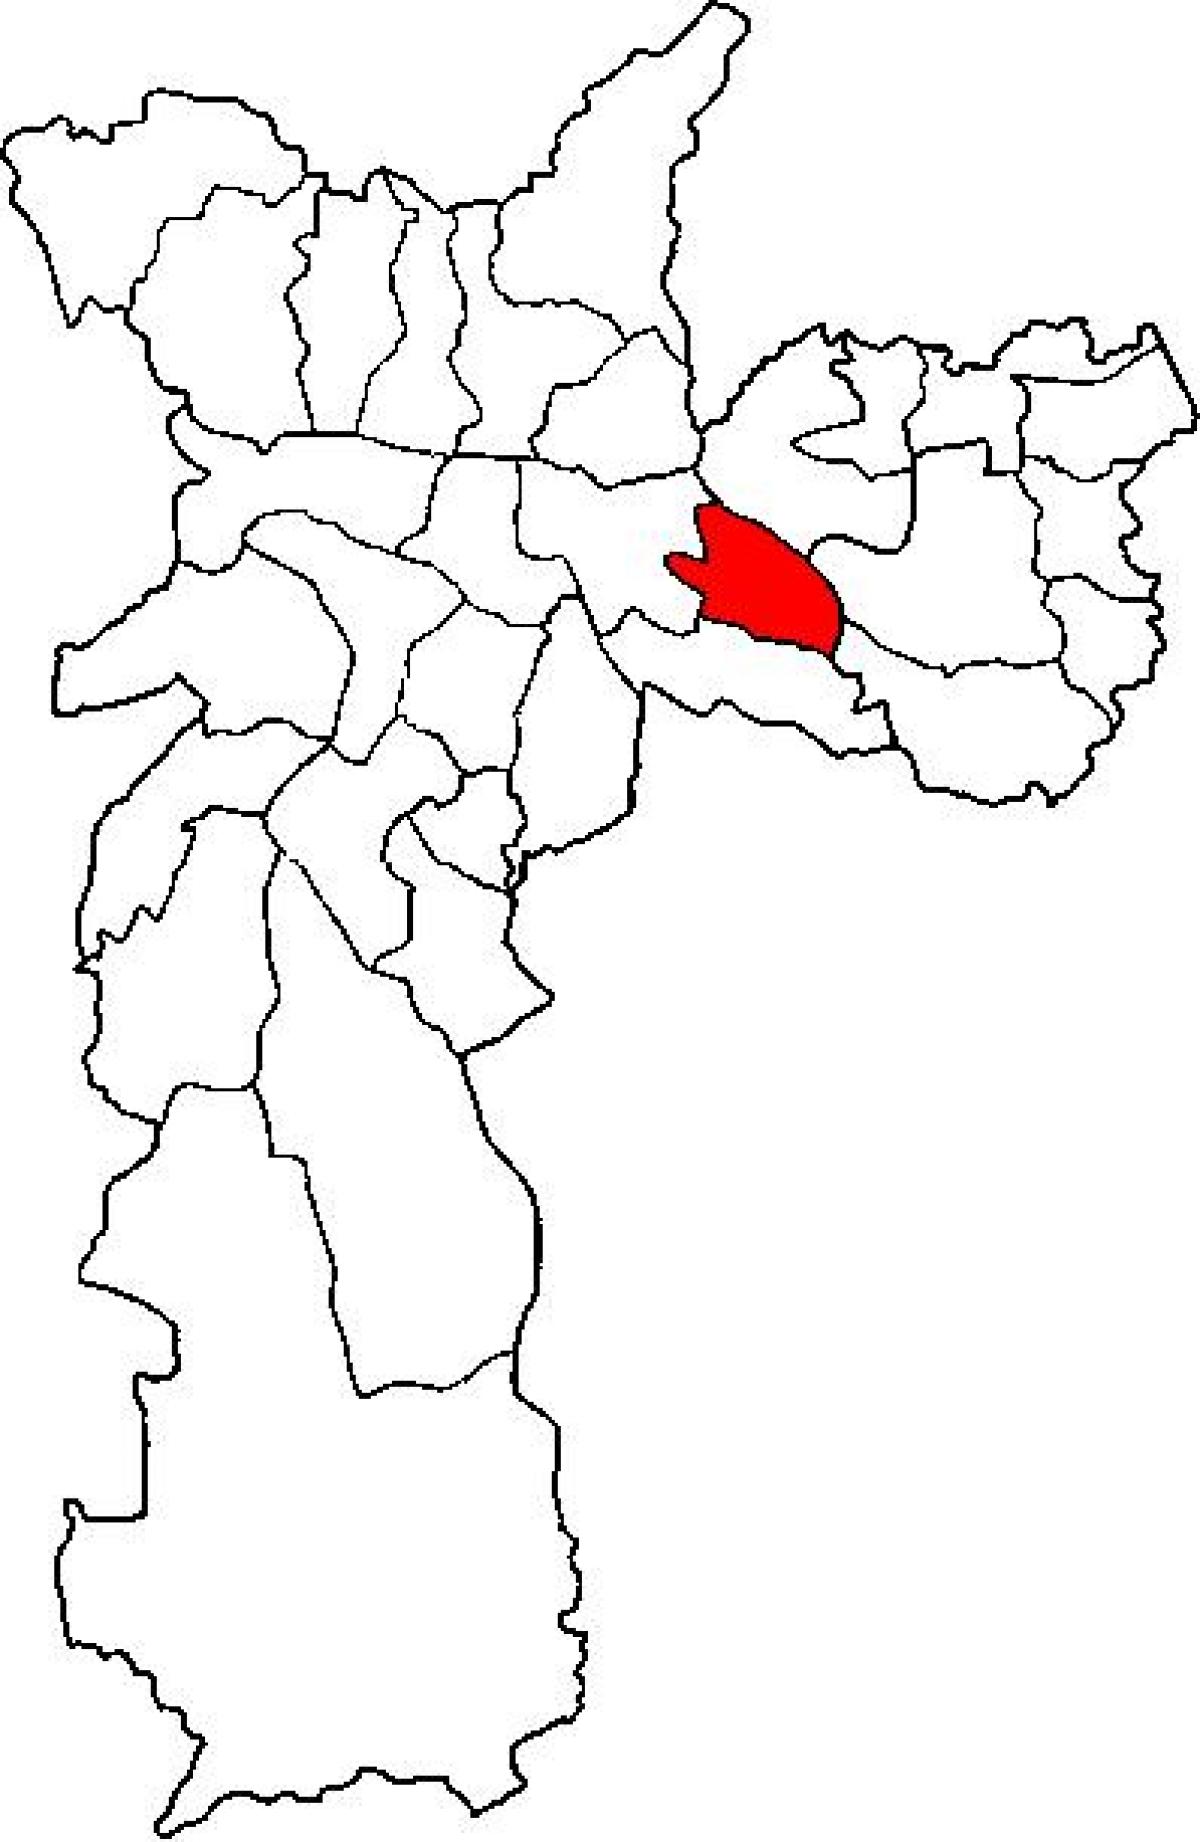 नक्शे के अरिकाण्डुवा-Vila Formosa उप-प्रान्त साओ पाउलो